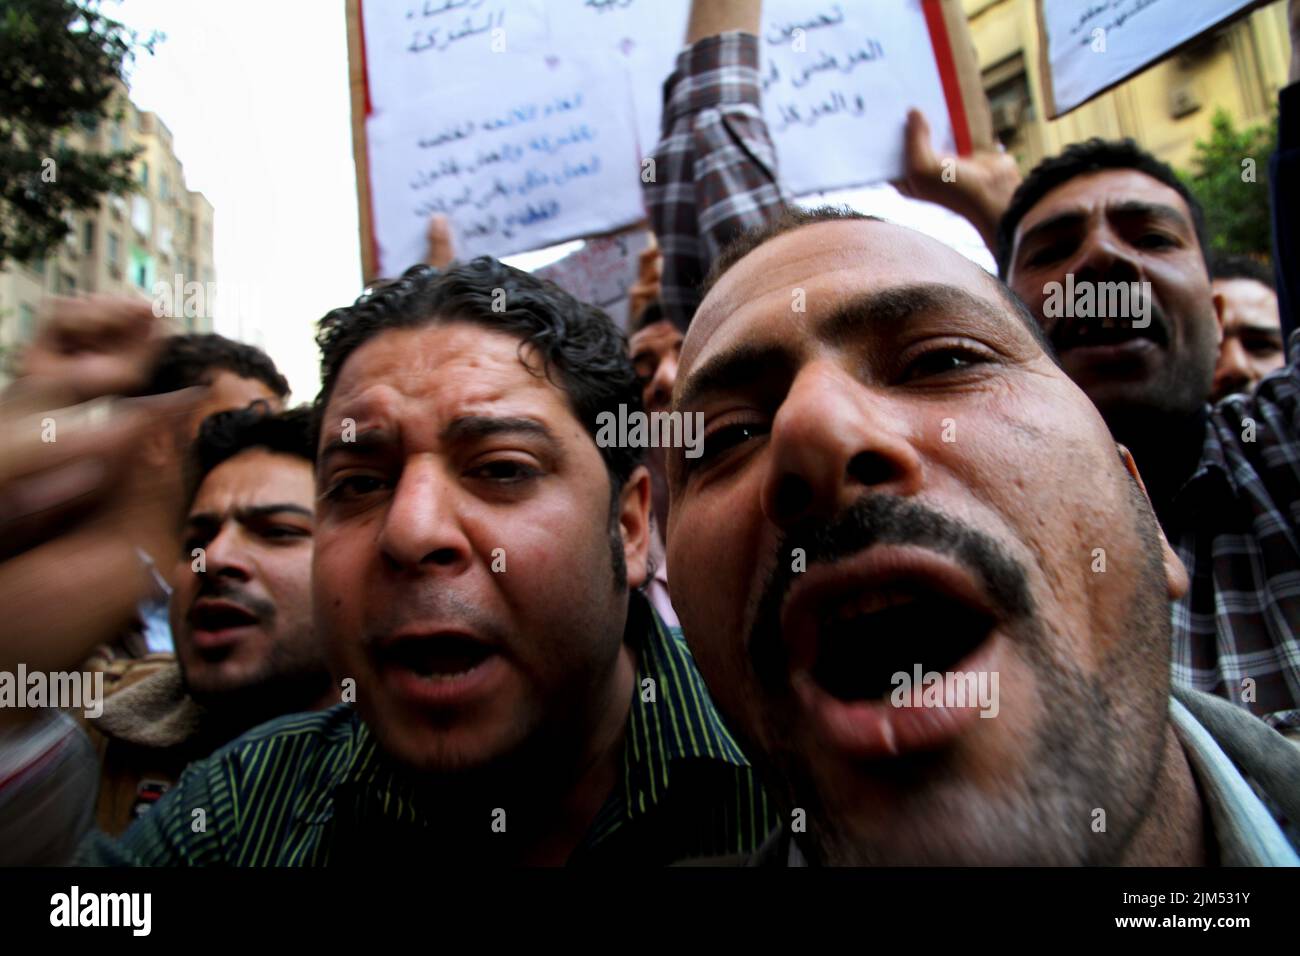 Cairo, Egypt. The Arab Spring Revolution, from 2011, which overthrew the regime of President Hosni Mubarak. Stock Photo